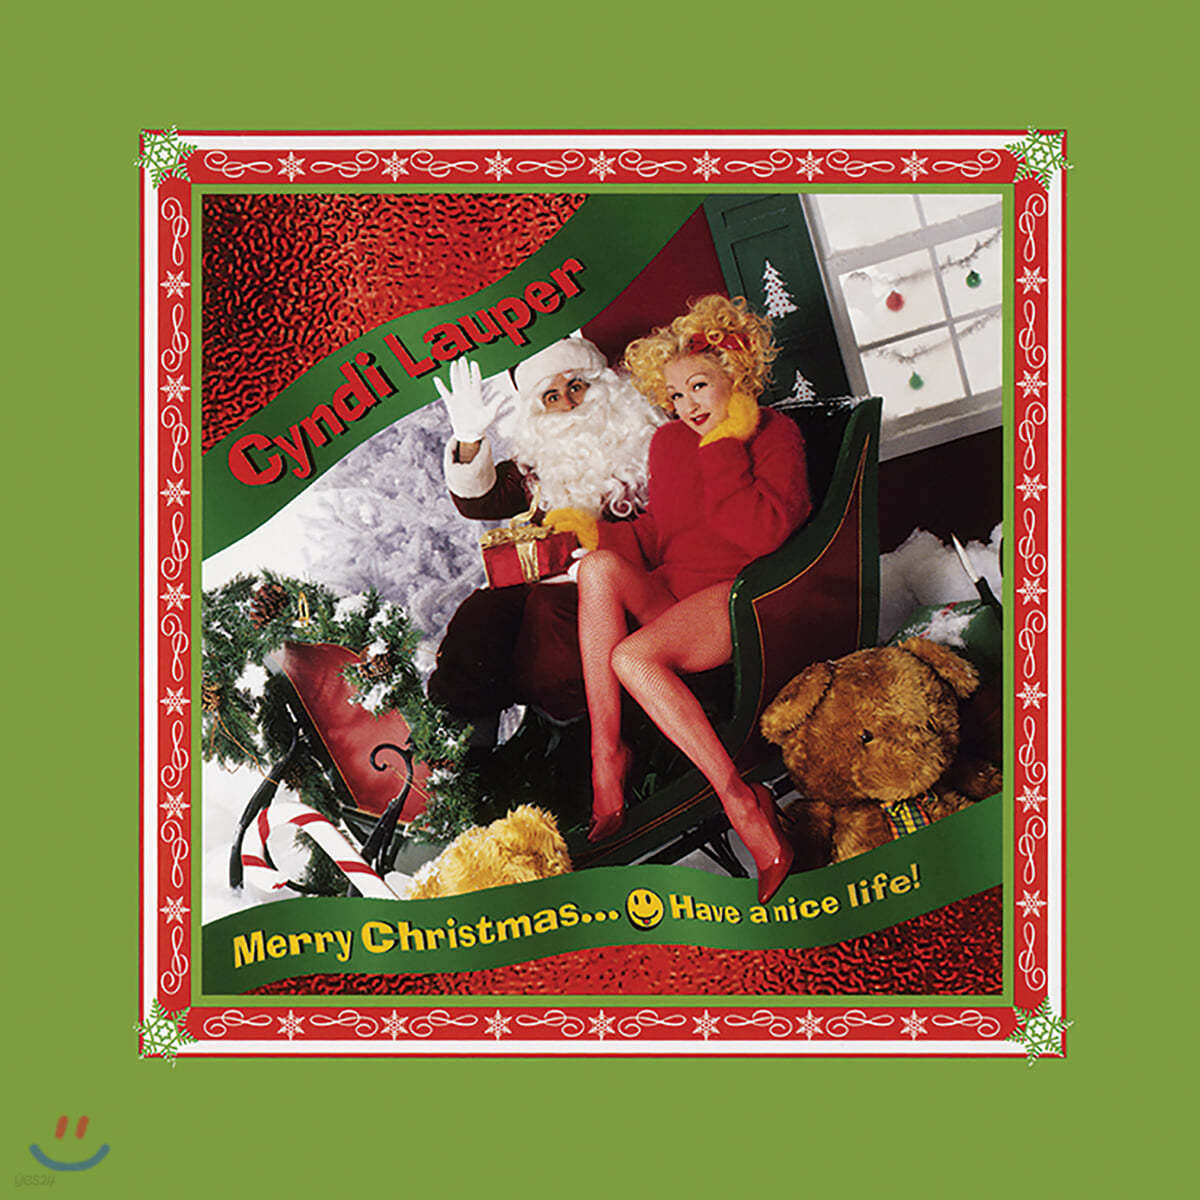 Cyndi Lauper - Merry Christmas…Have a Nice Life! 신디 로퍼 크리스마스 앨범 [스노우화이트 컬러 LP] 